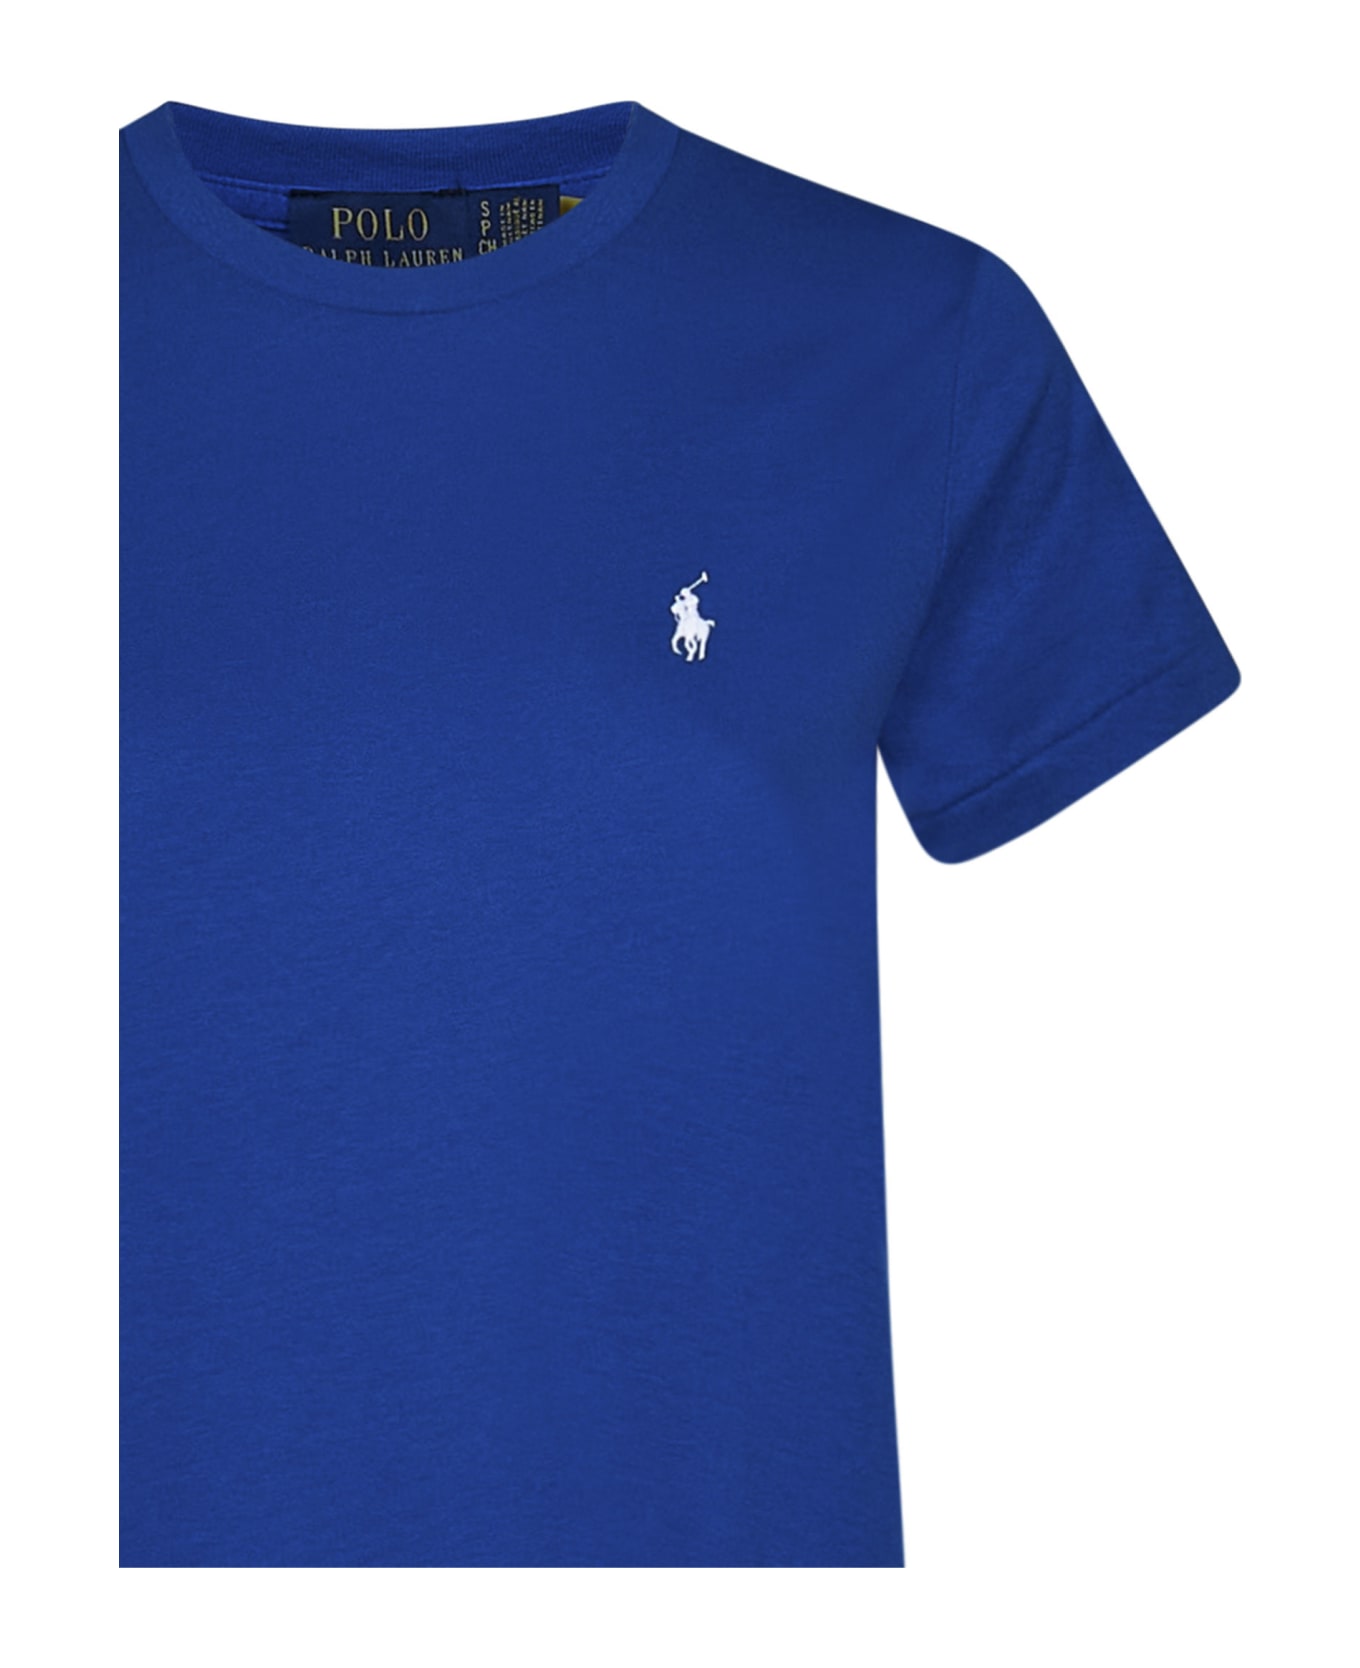 Polo Ralph Lauren Pony T-shirt - Blue